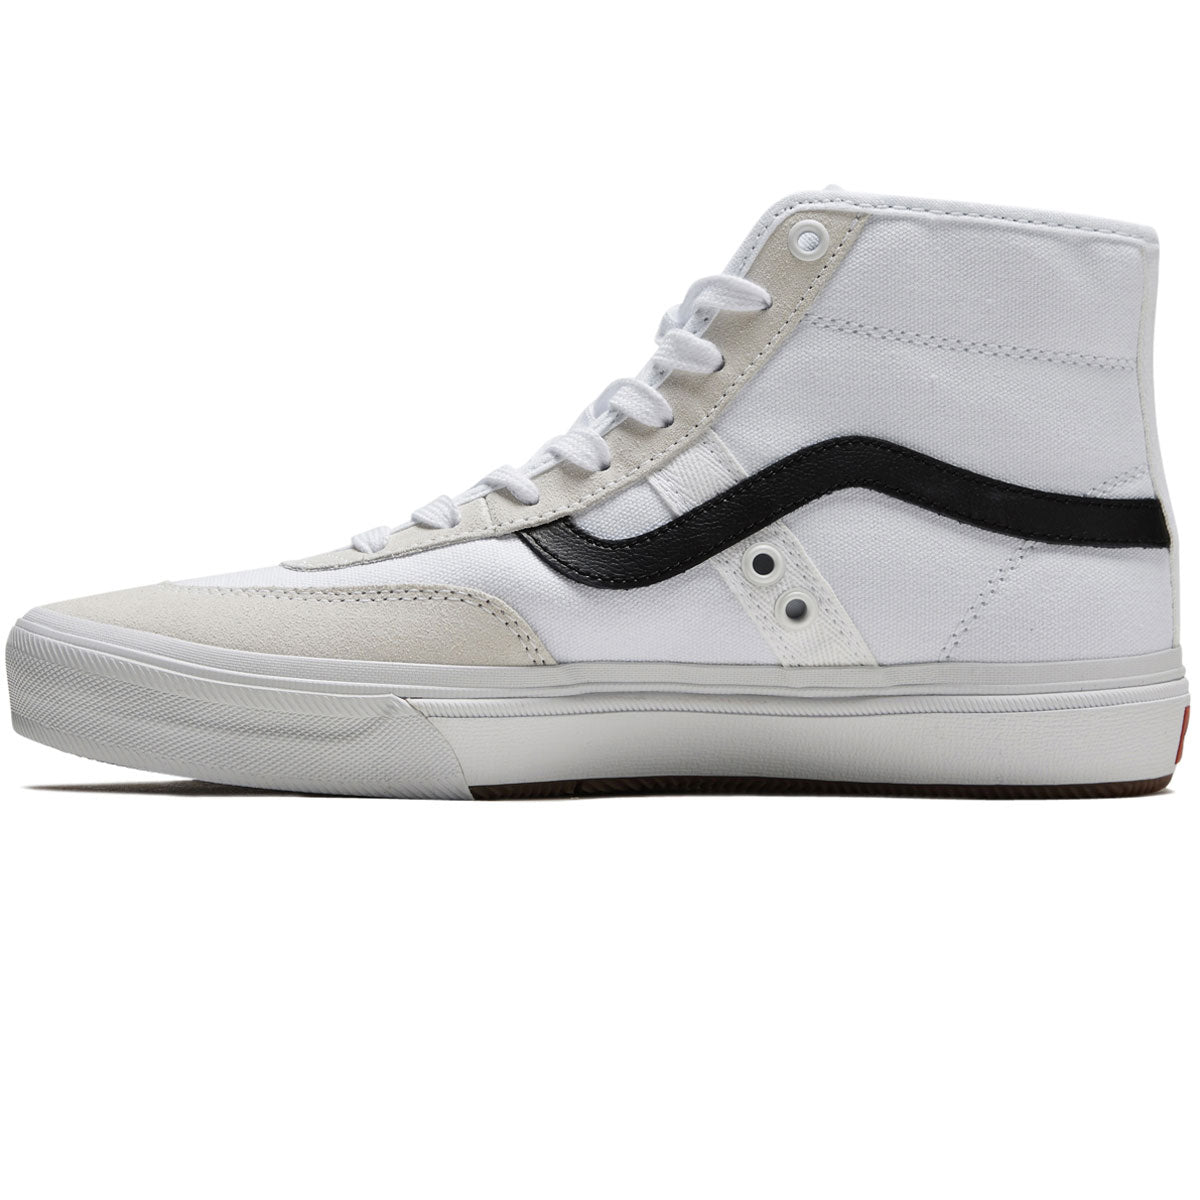 Vans Crockett High Shoes - White/Black/Gum image 2